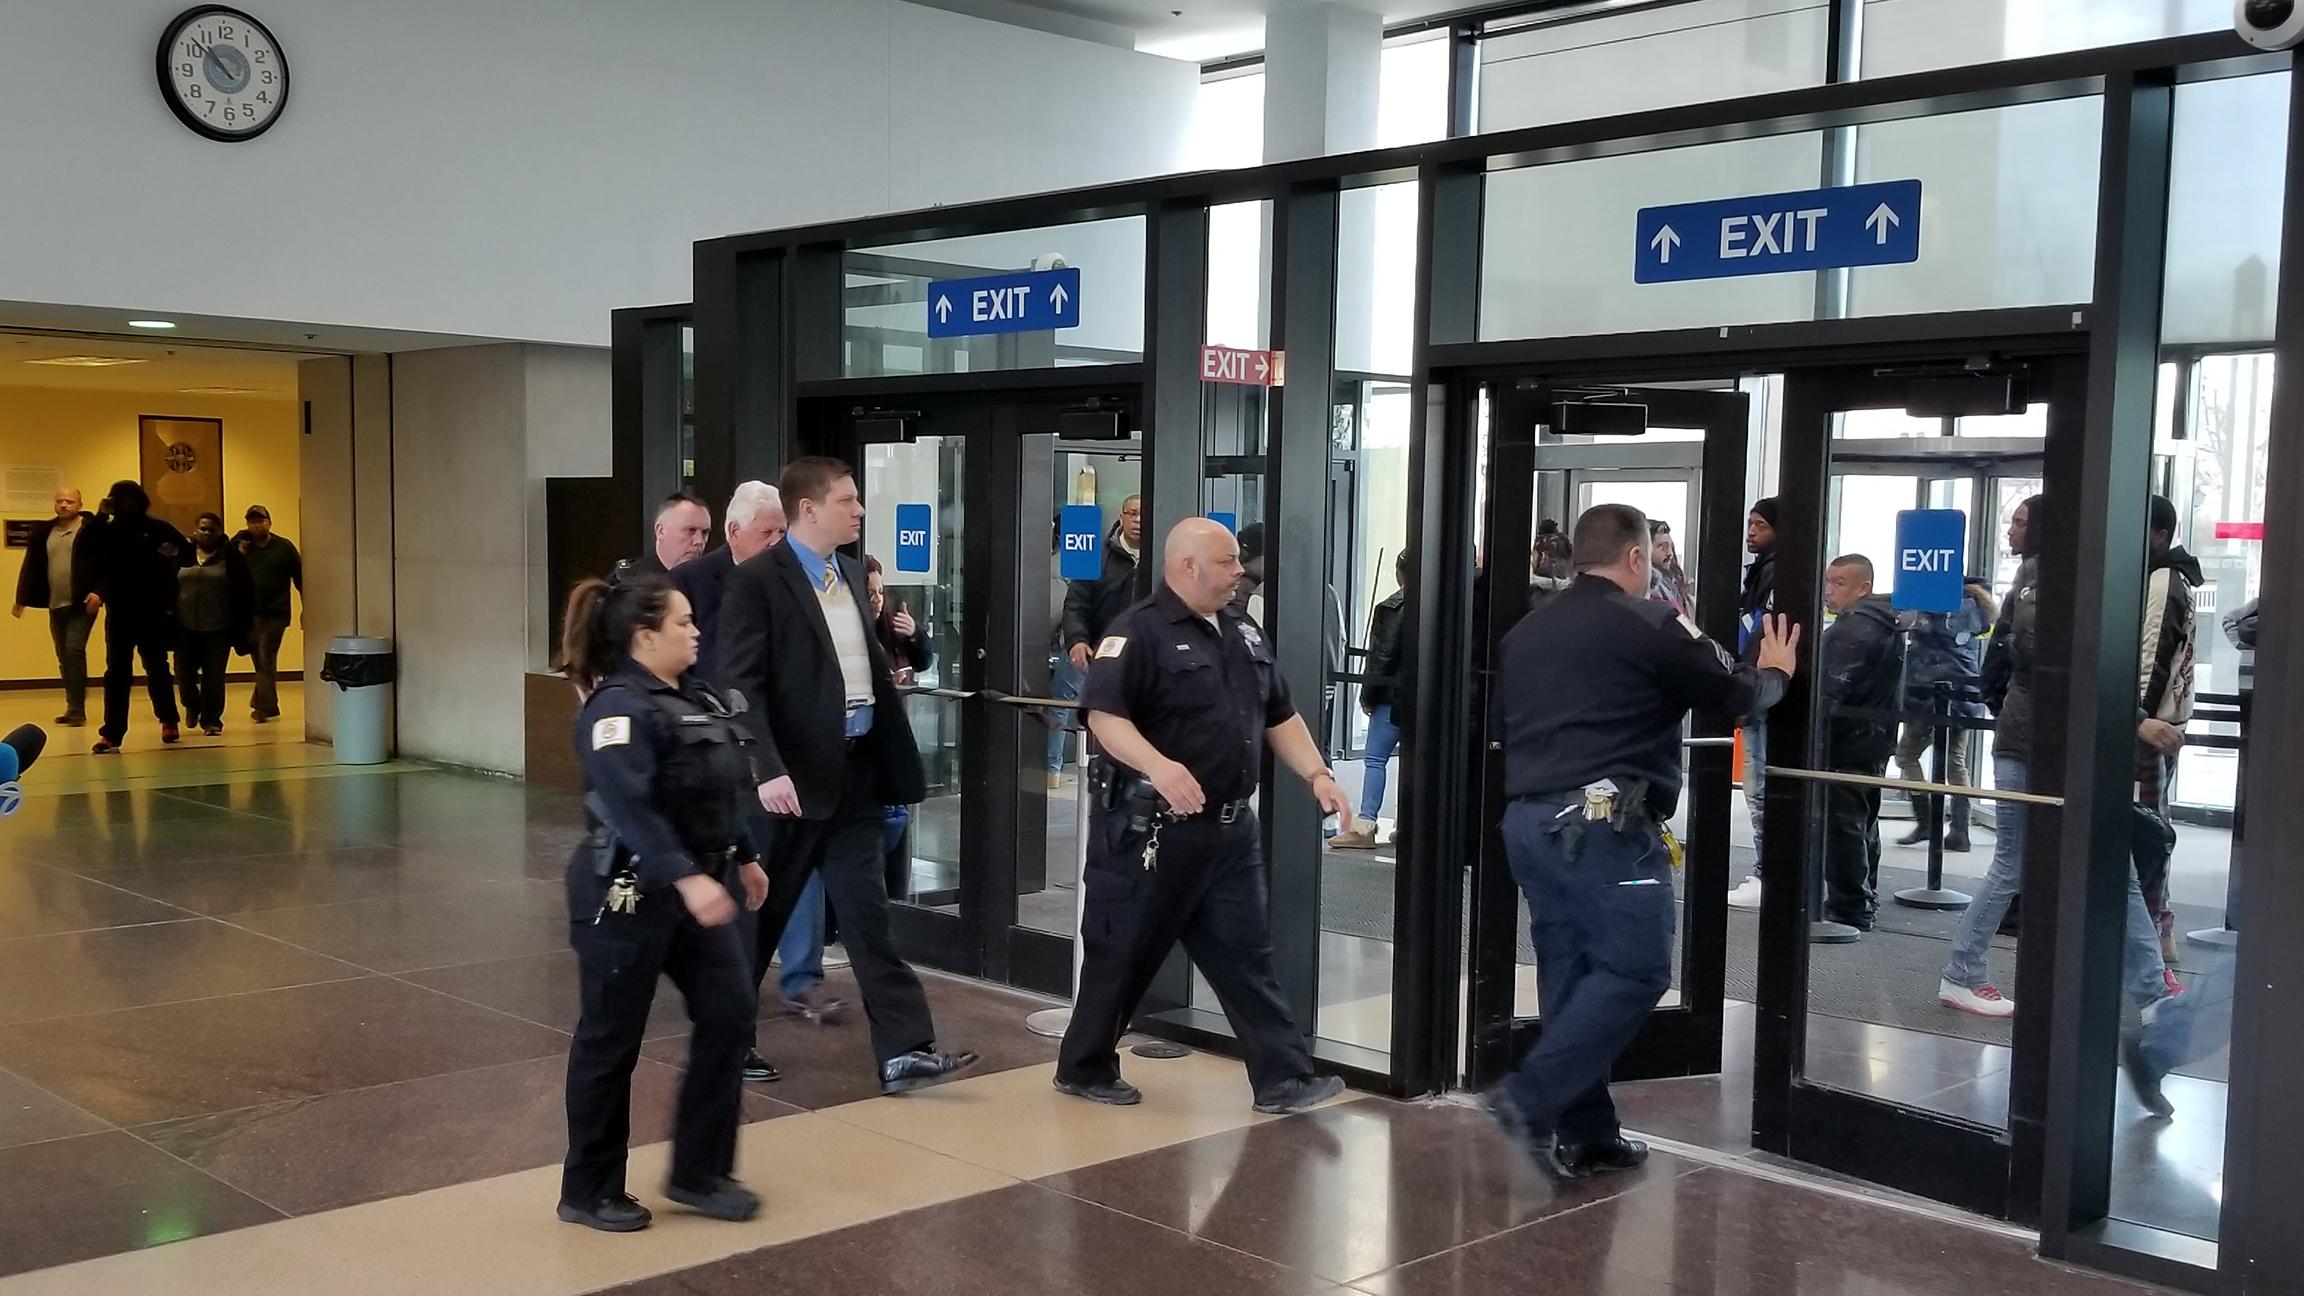 Wearing a bulletproof vest, Jason Van Dyke exits the Leighton Criminal Court Building in Chicago on Thursday, March 8, 2018. (Matt Masterson / Chicago Tonight)